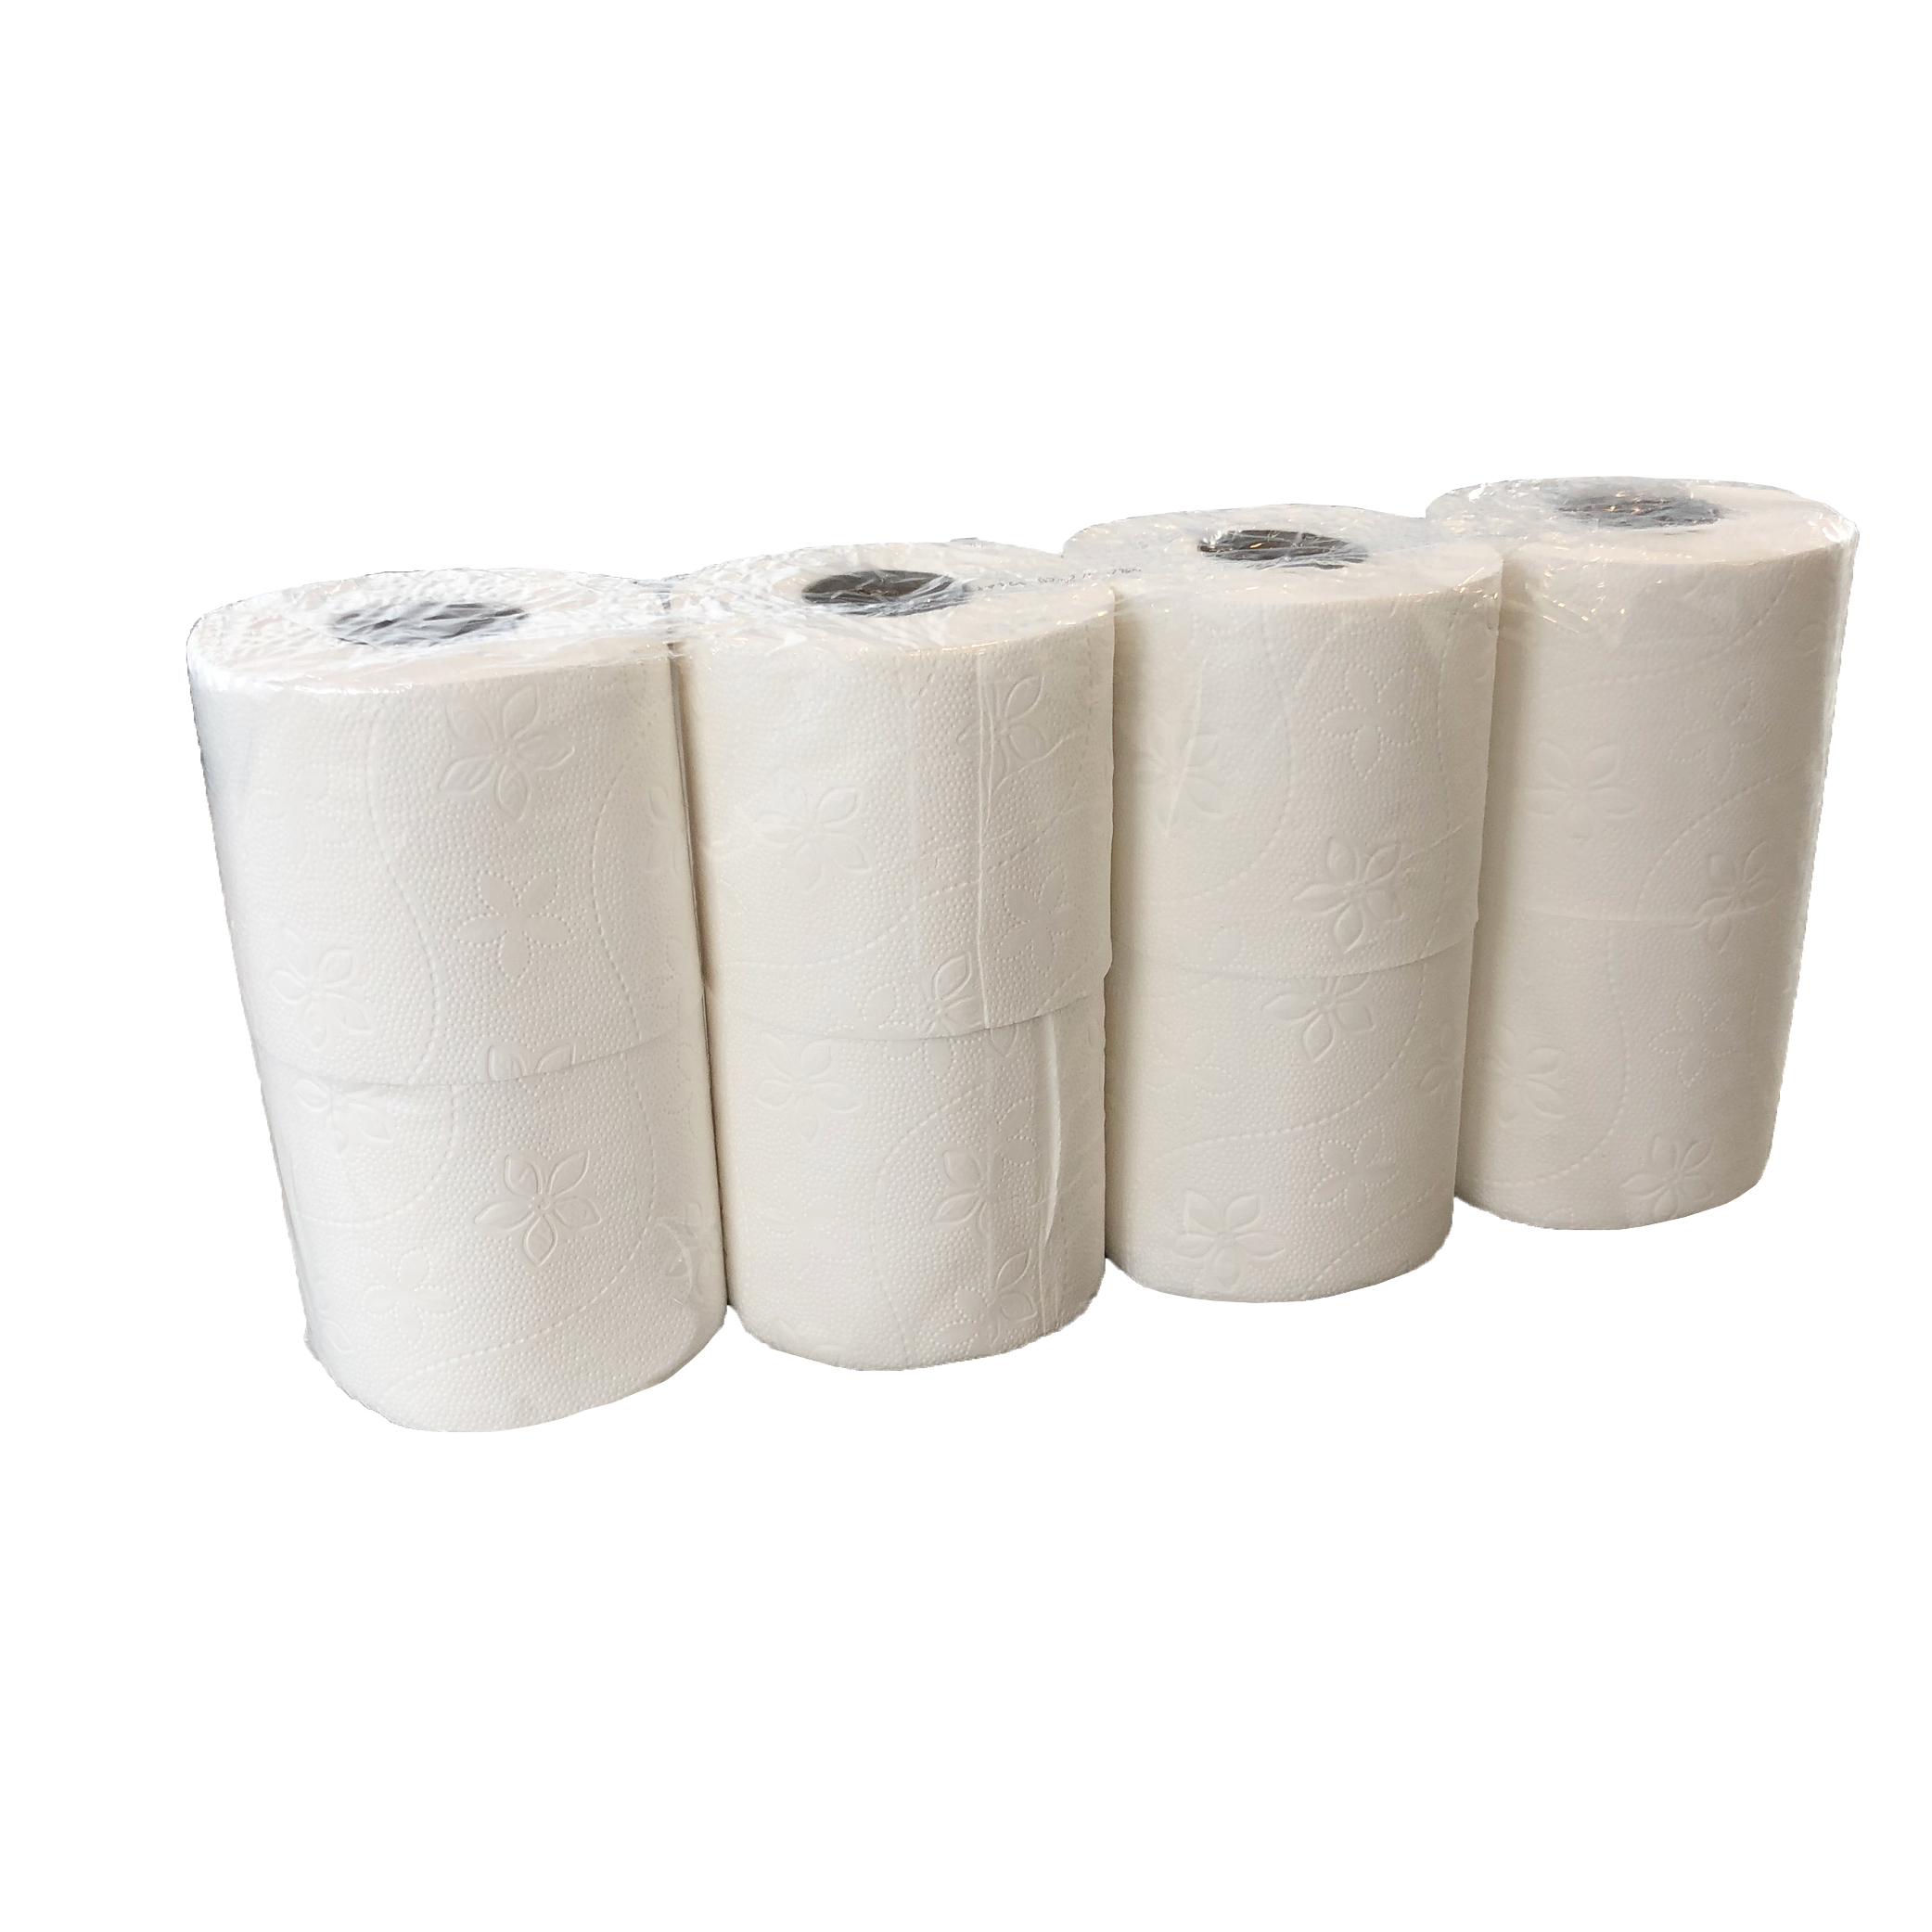 Toiletpapier, extra zacht wc papier